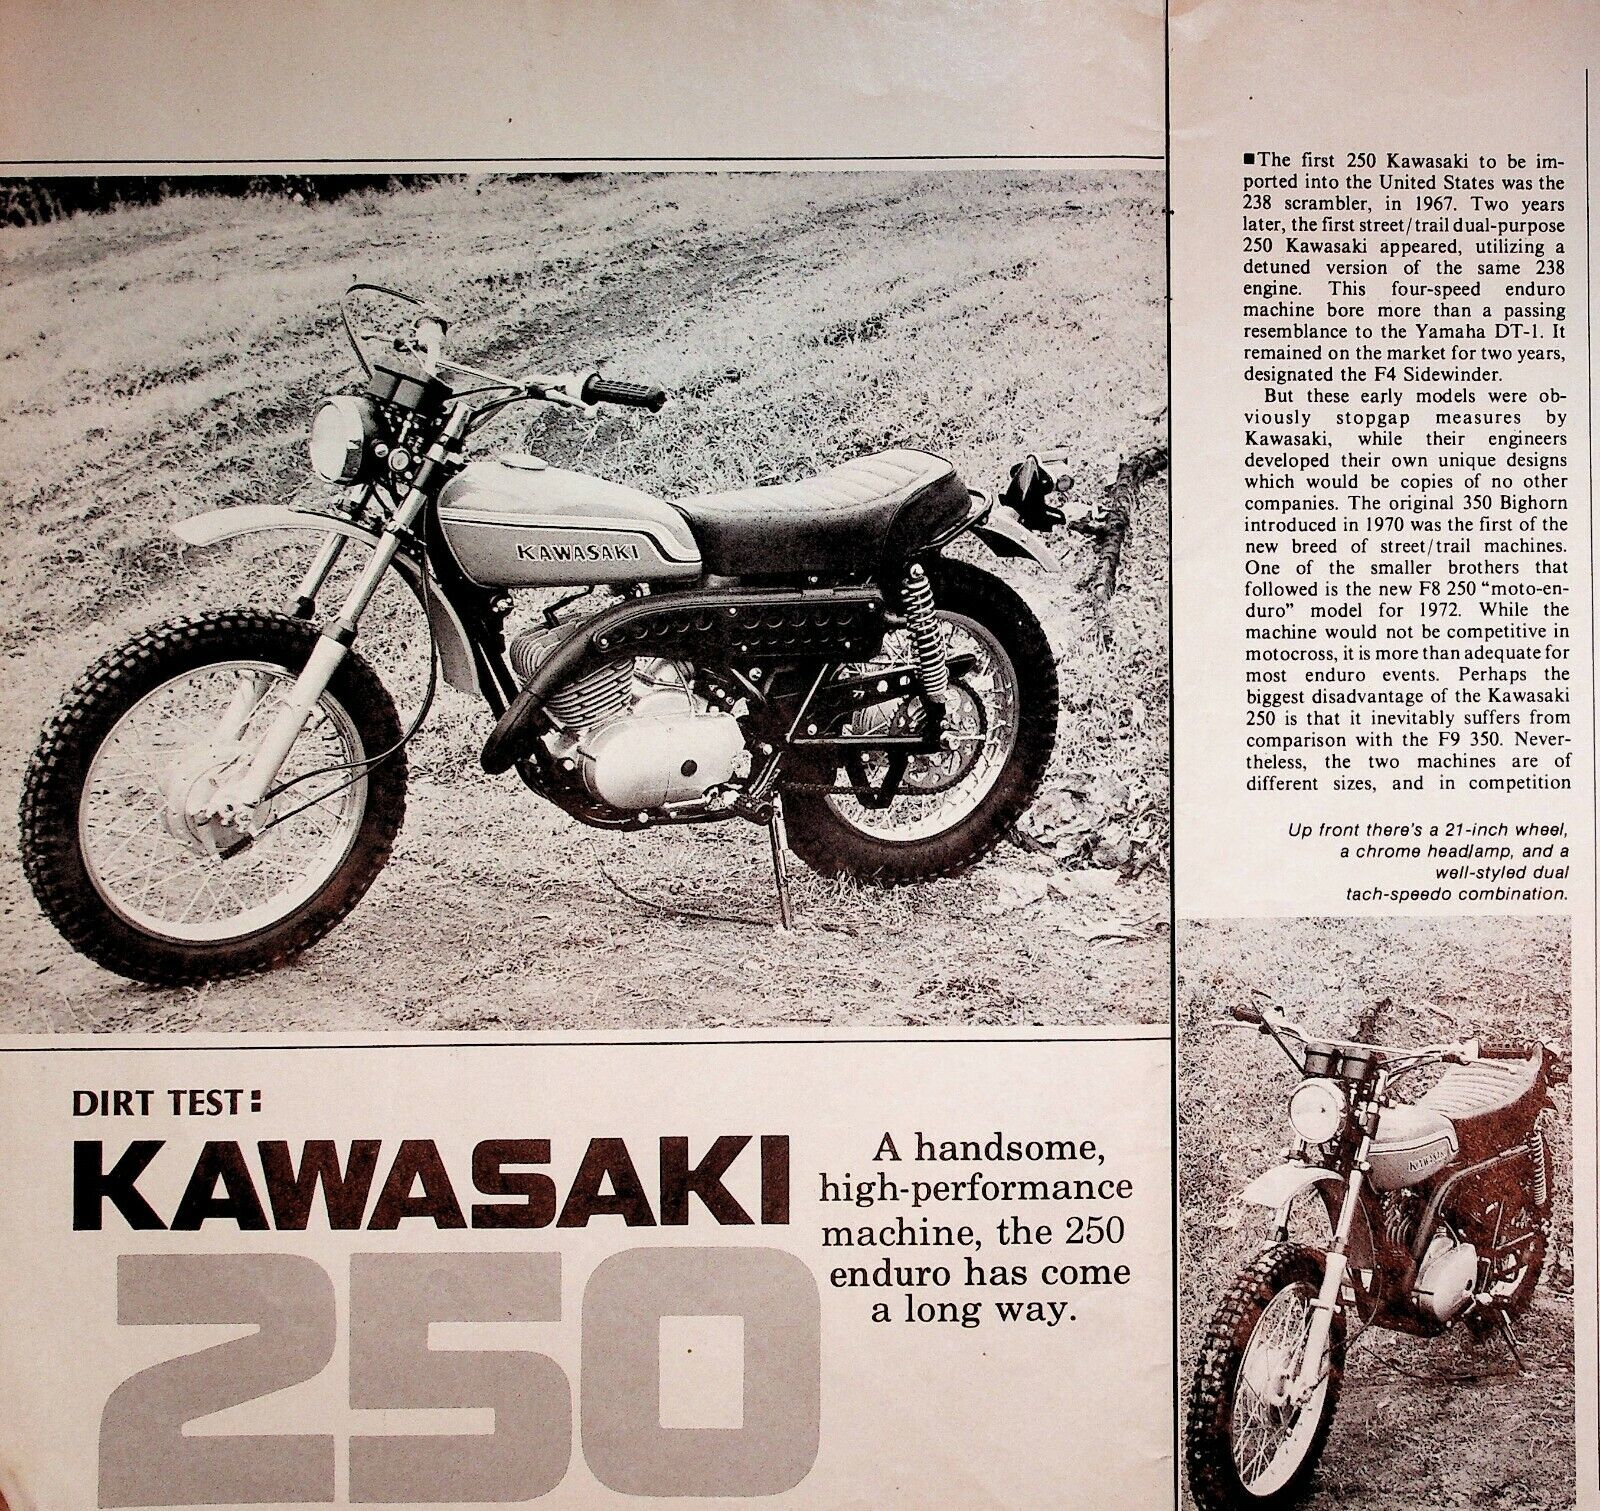 1972 Kawasaki 250 Enduro Dirt Test - 6-Page Vintage Motorcycle Article